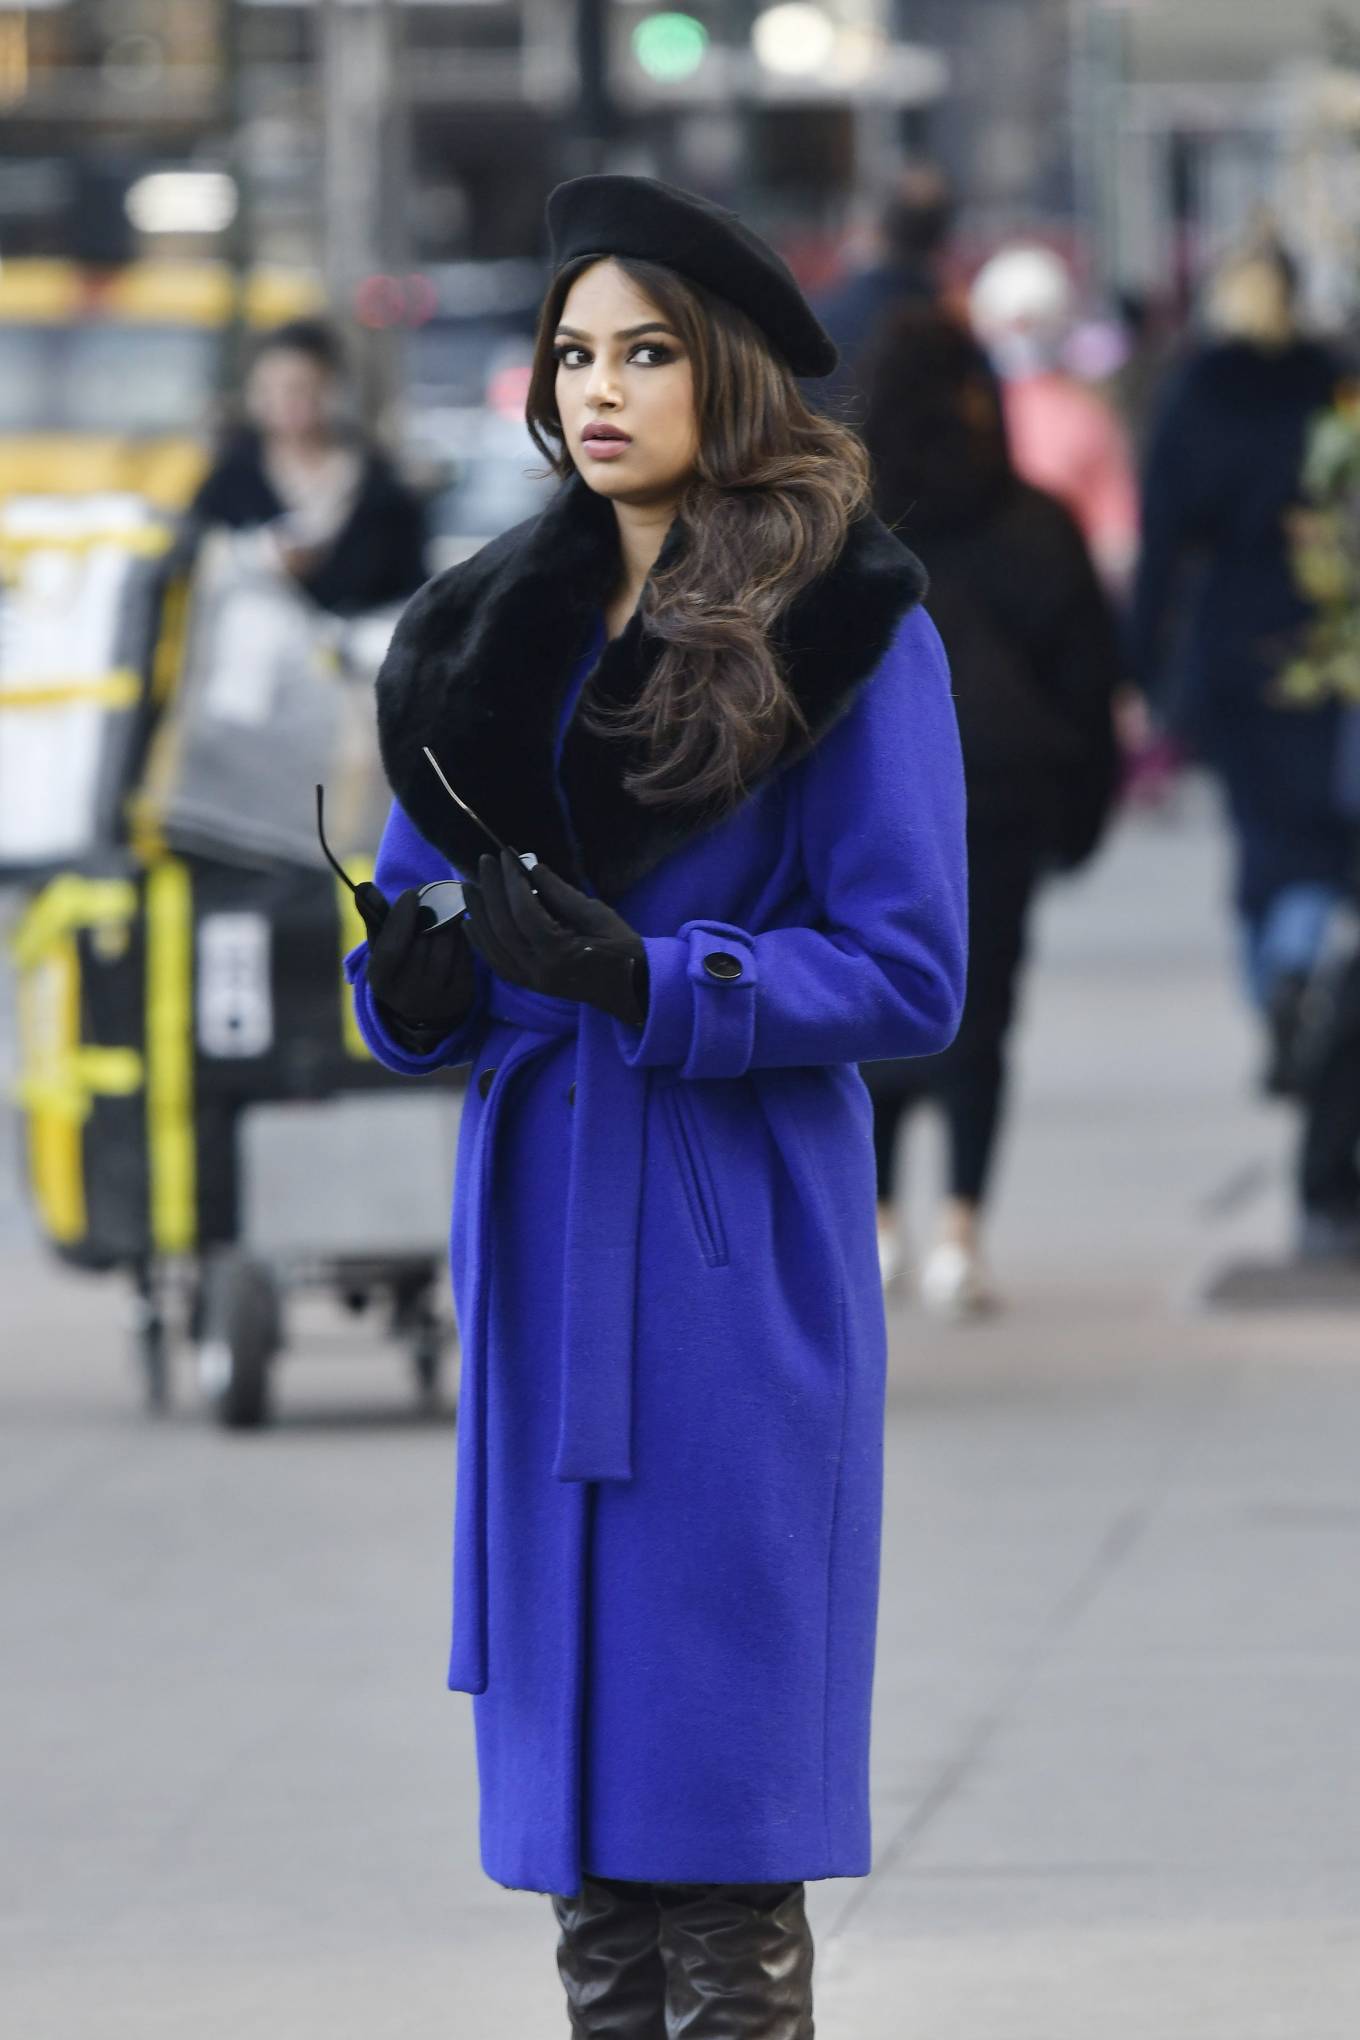 Harnaaz Sandhu 2022 : Harnaaz Sandhu – Wearing a fur accented purple coat on a press photo op in New York-05